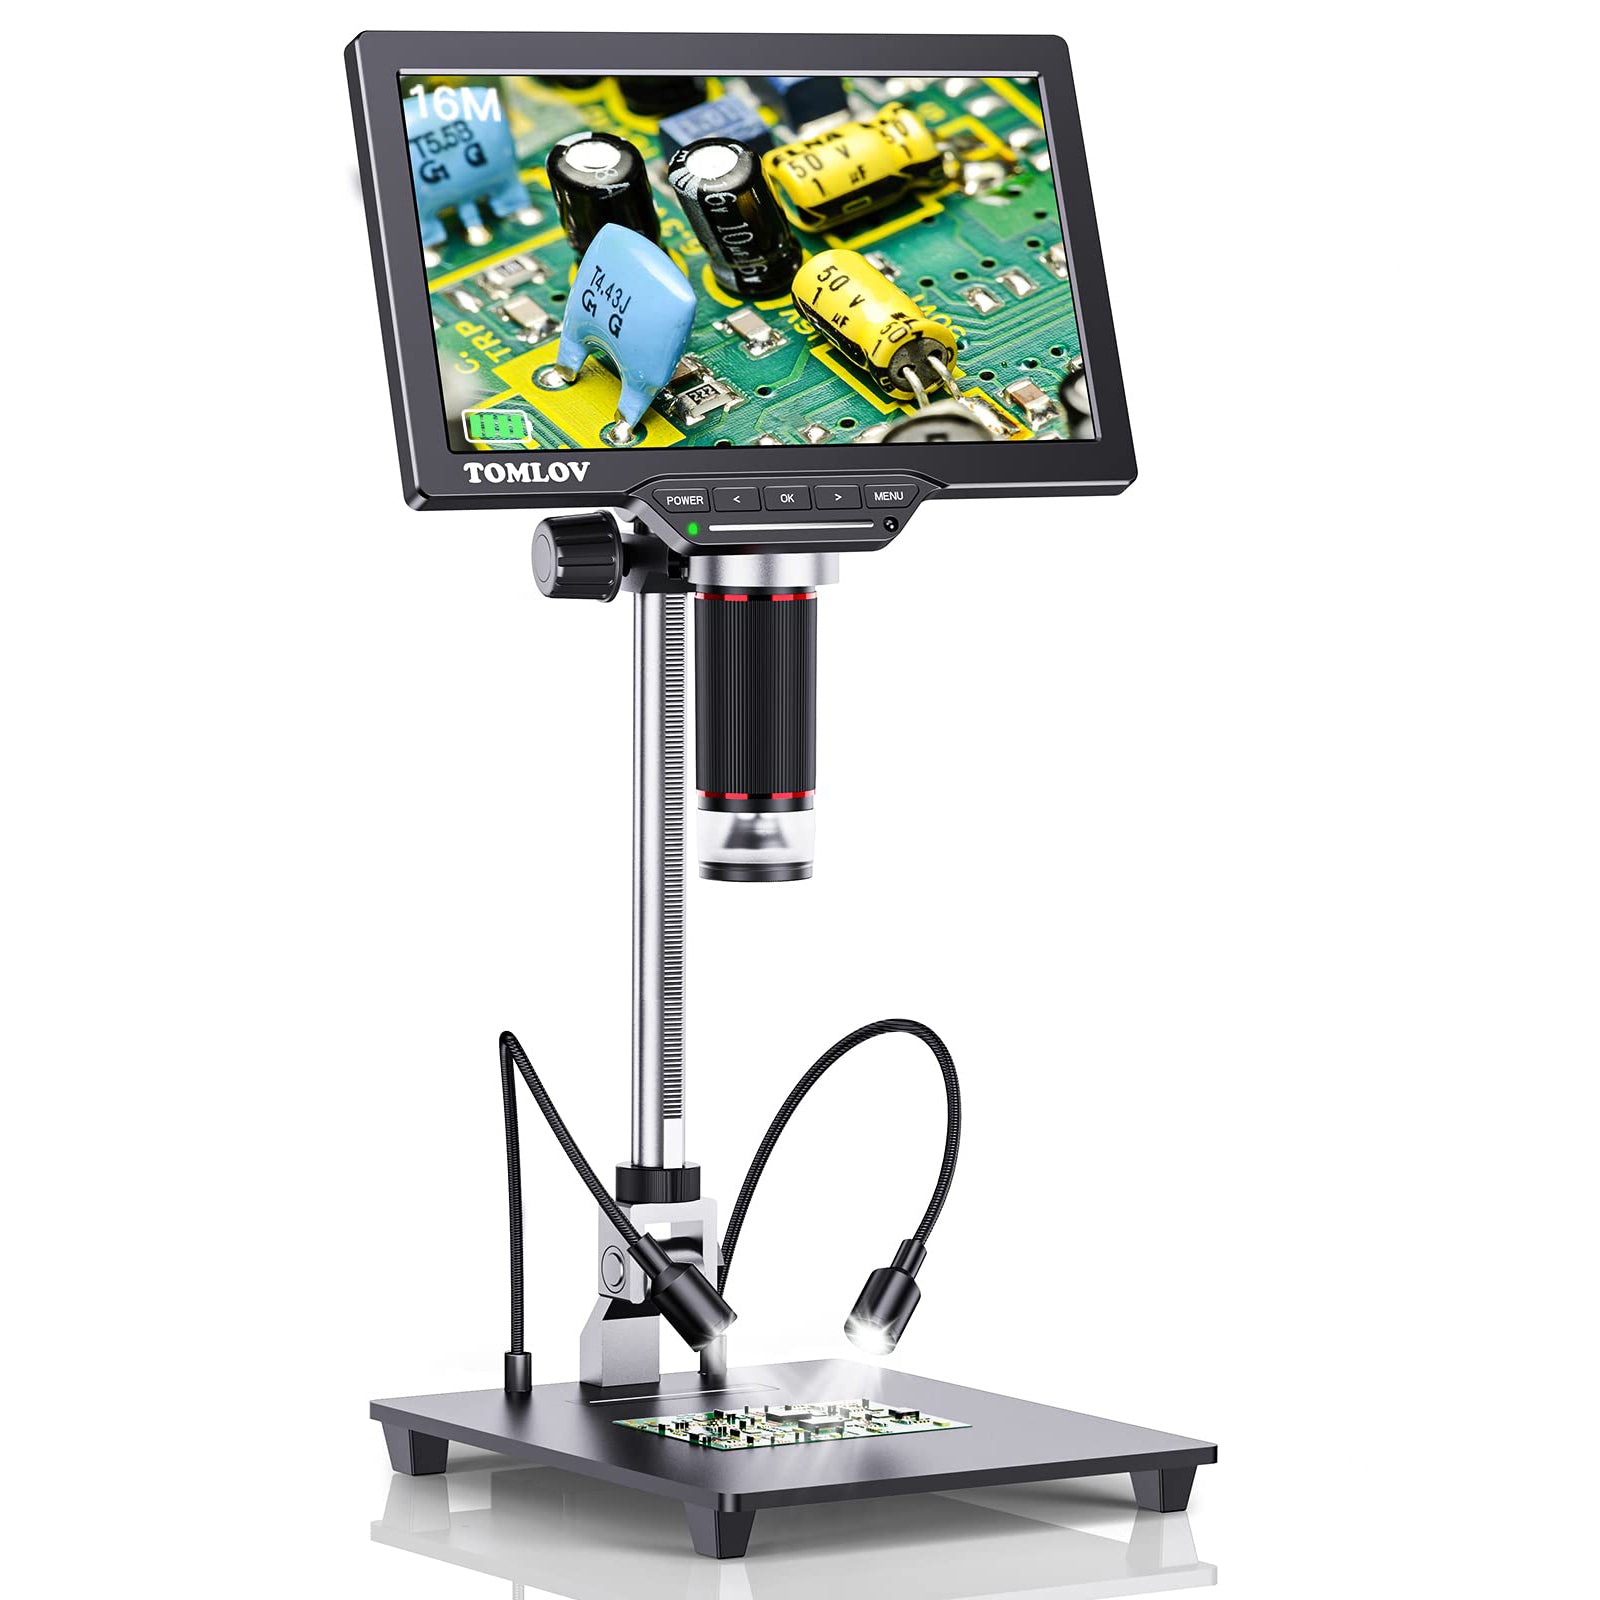 TOMLOV DM201 Pro Digital Microscope HDMI LCD Microscope